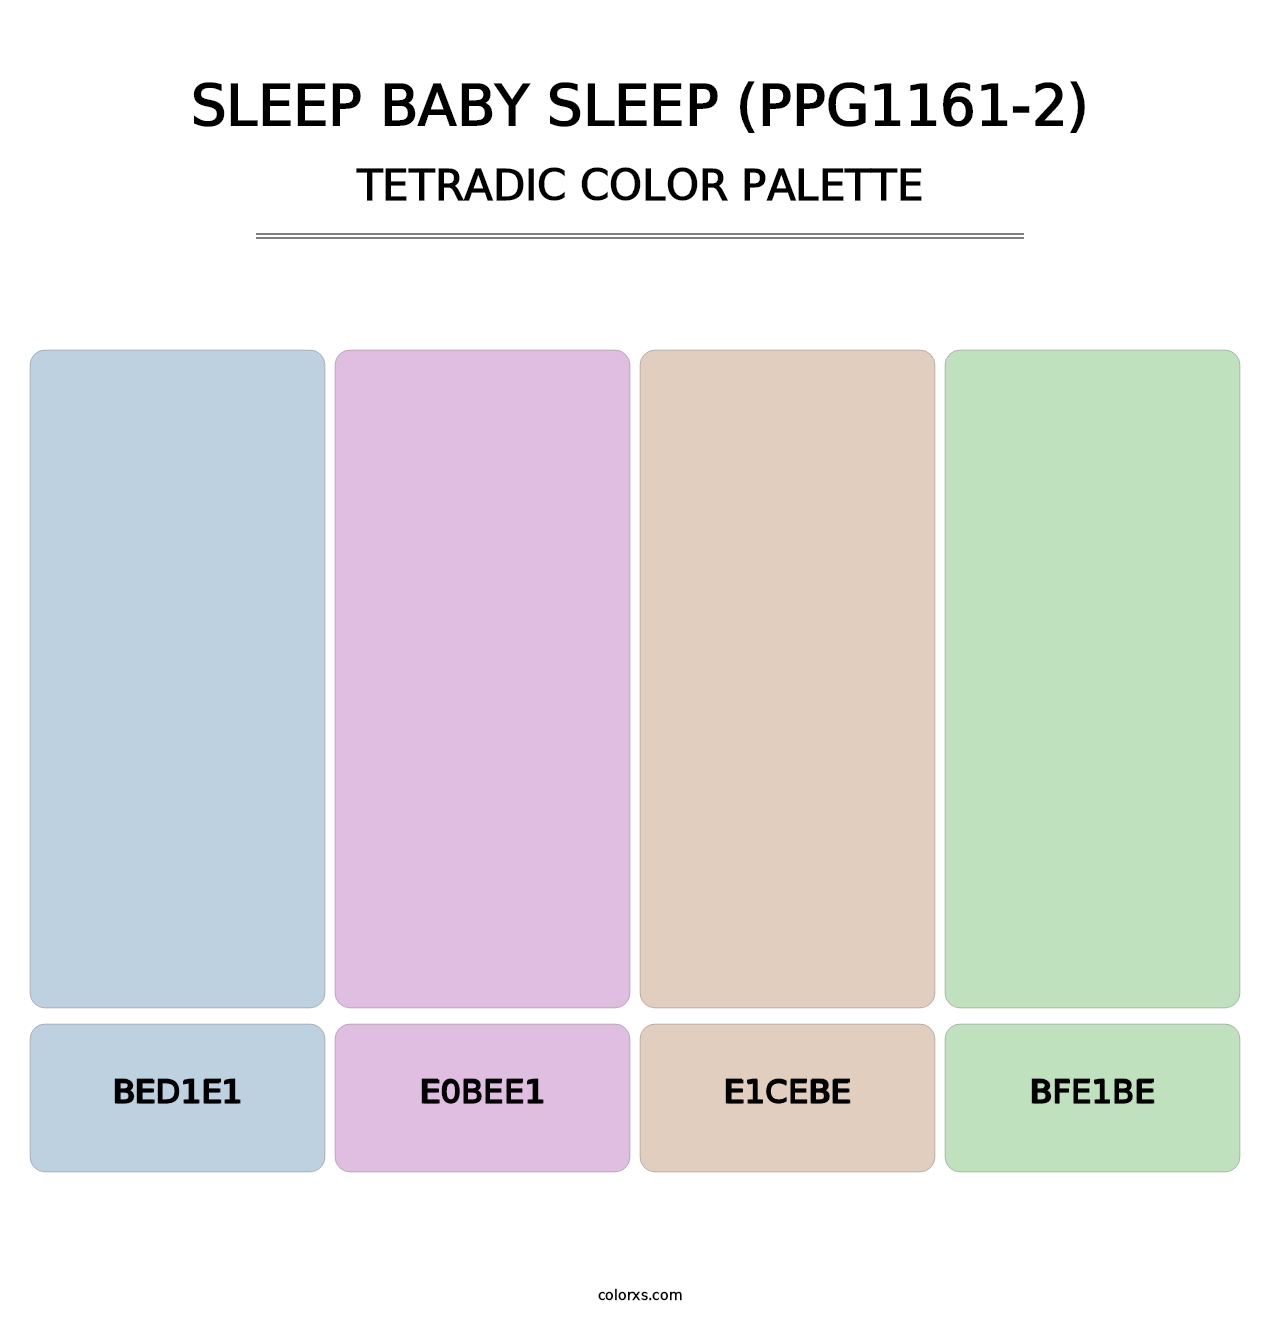 Sleep Baby Sleep (PPG1161-2) - Tetradic Color Palette